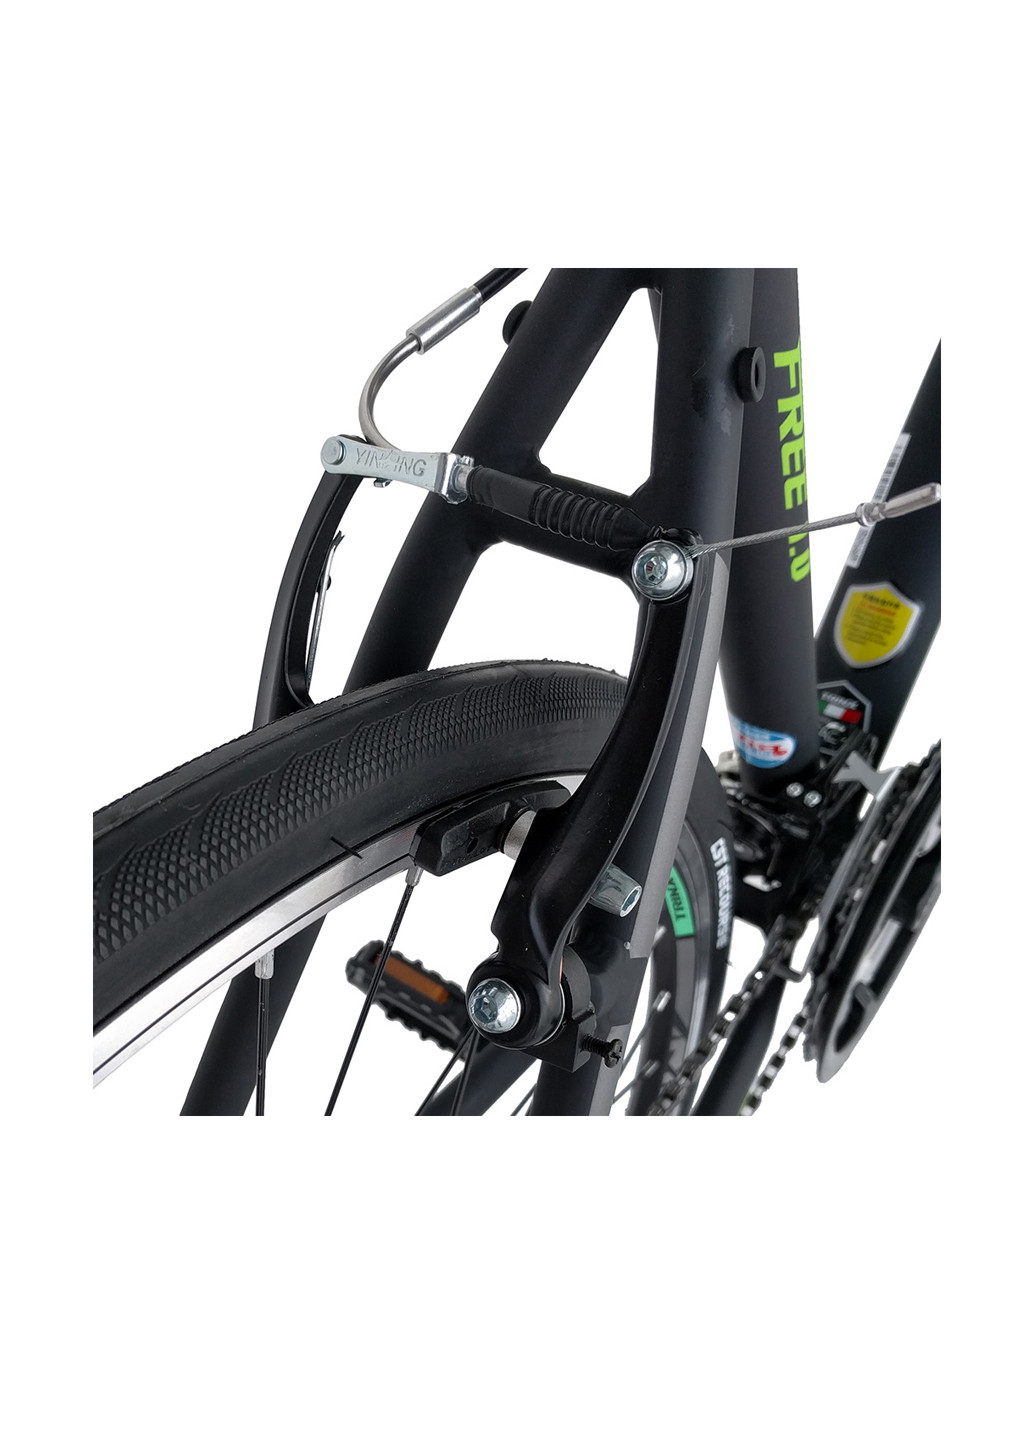 Велосипед Free 1.0 700C * 470 Matt-Black-Grey-Green Trinx free 1.0 700c*470 matt-black-grey-green (146489492)